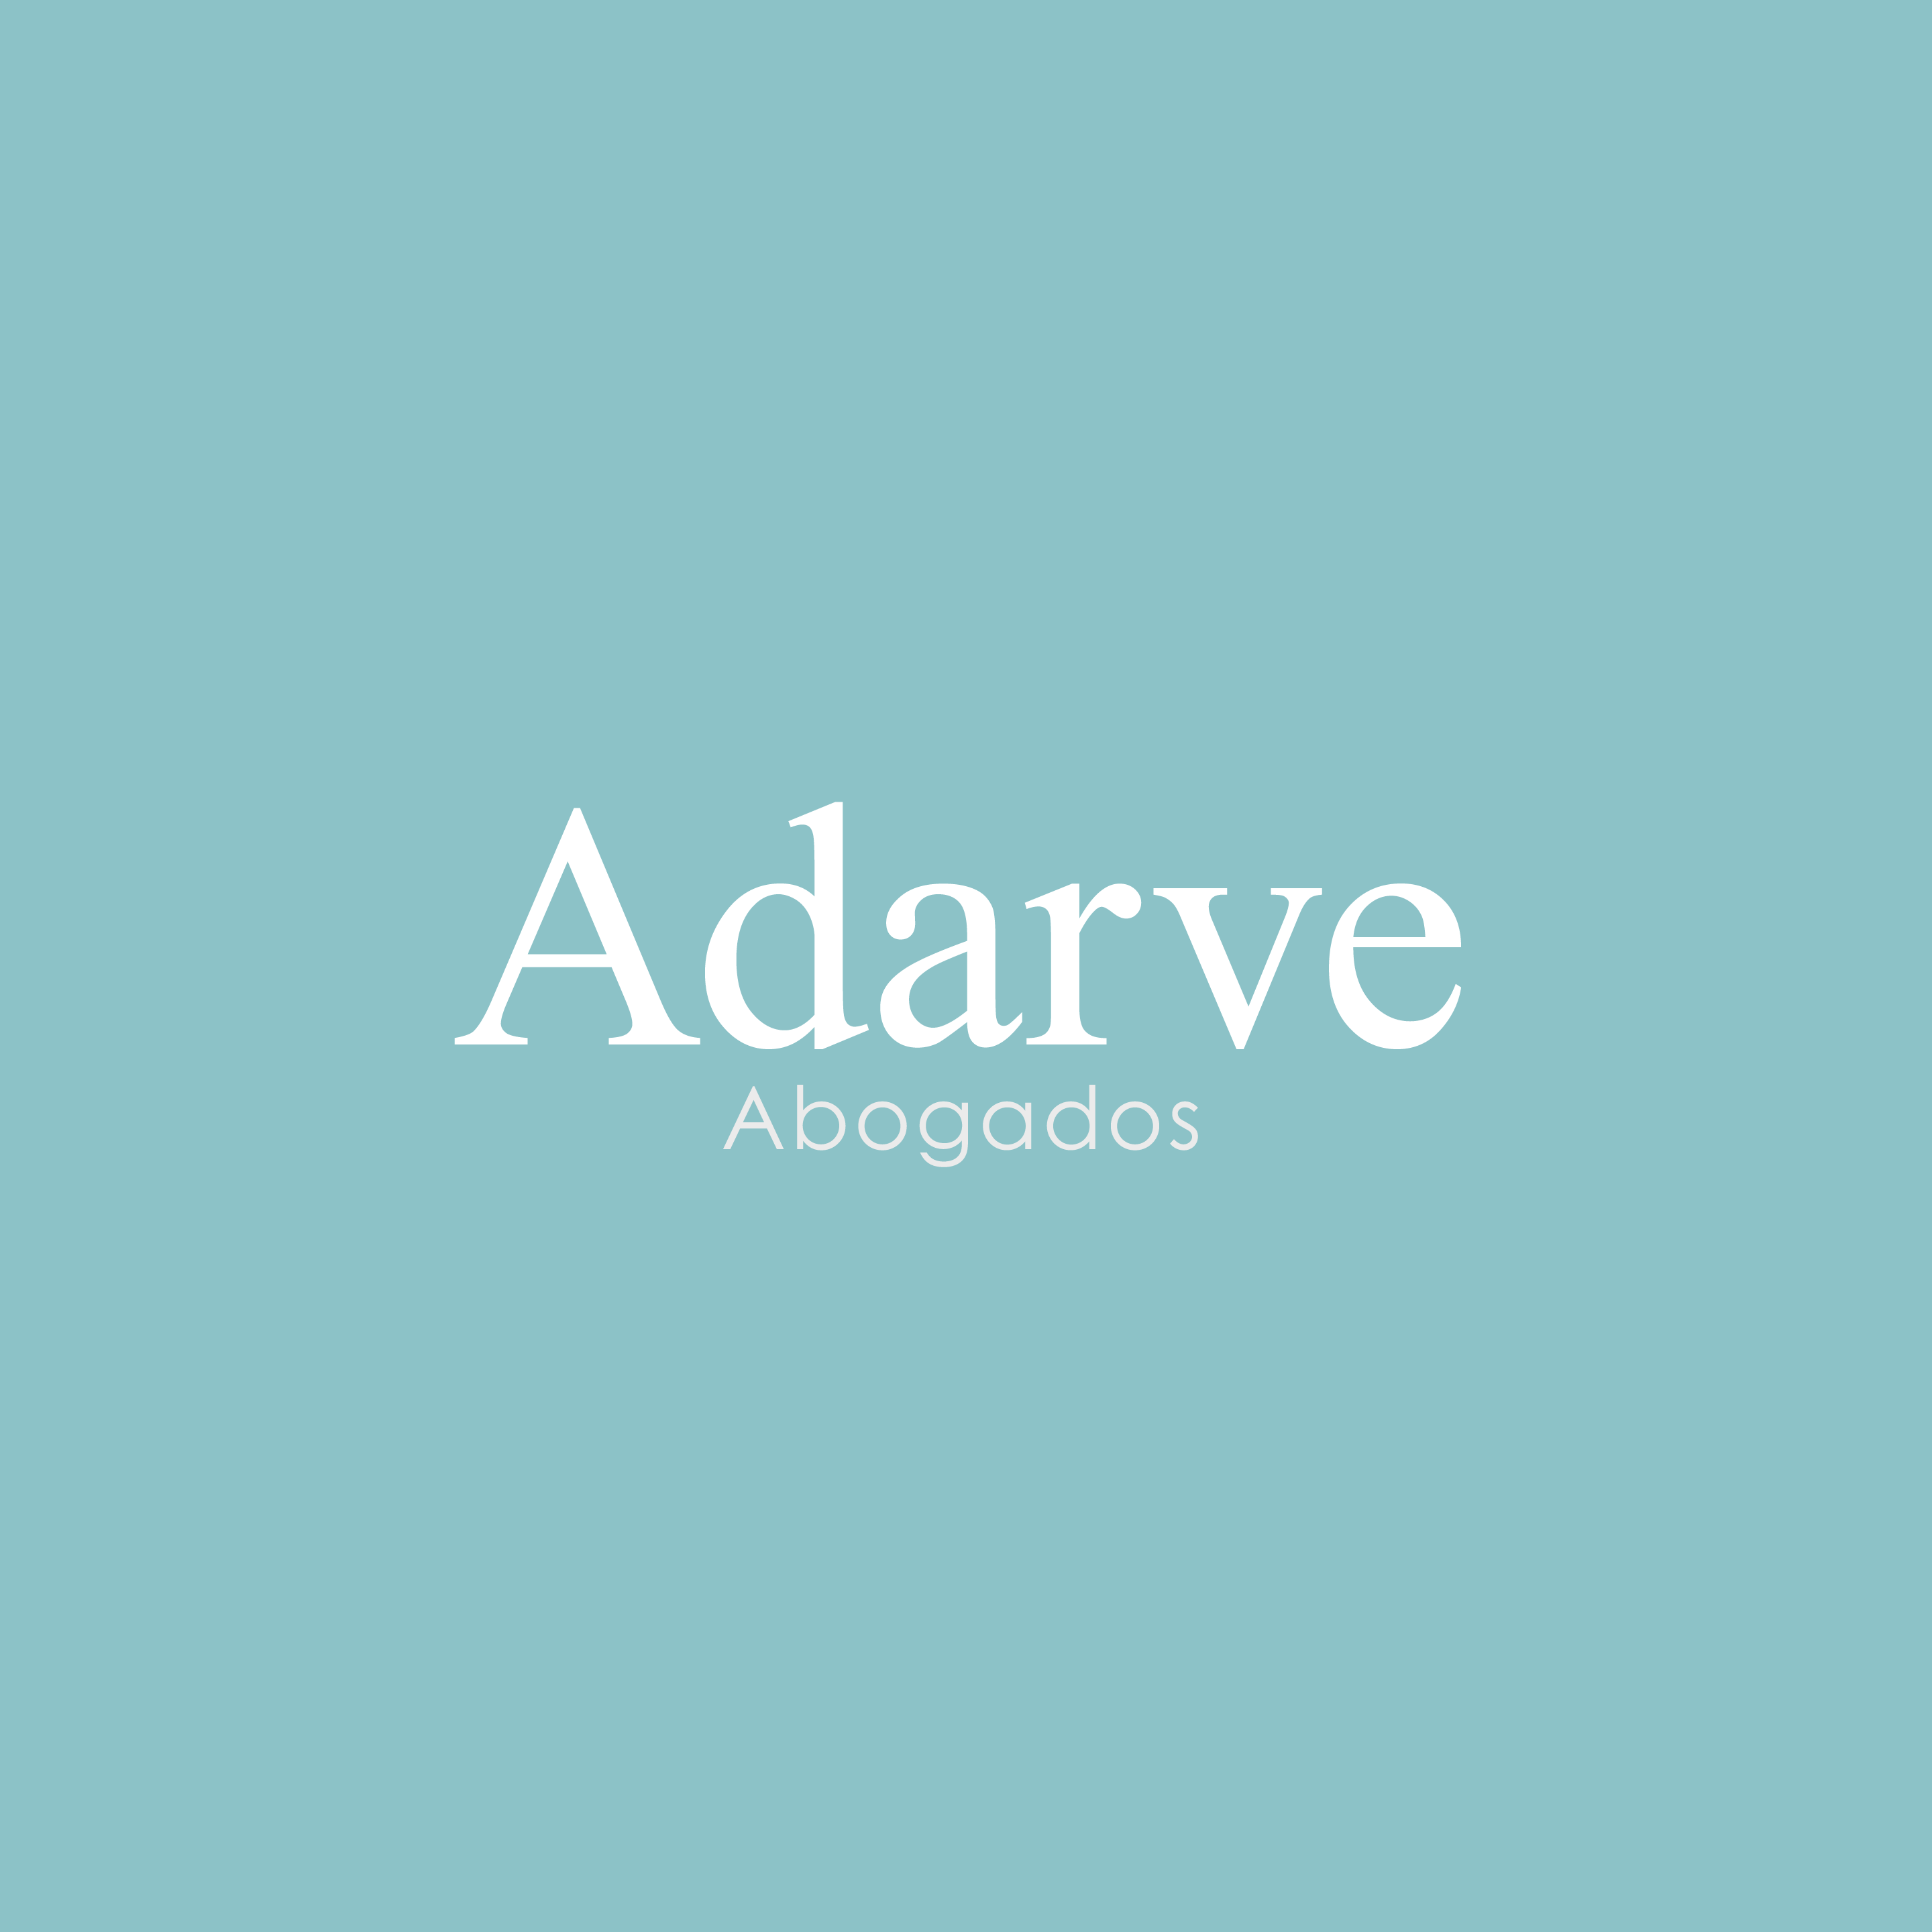 (c) Adarve.com